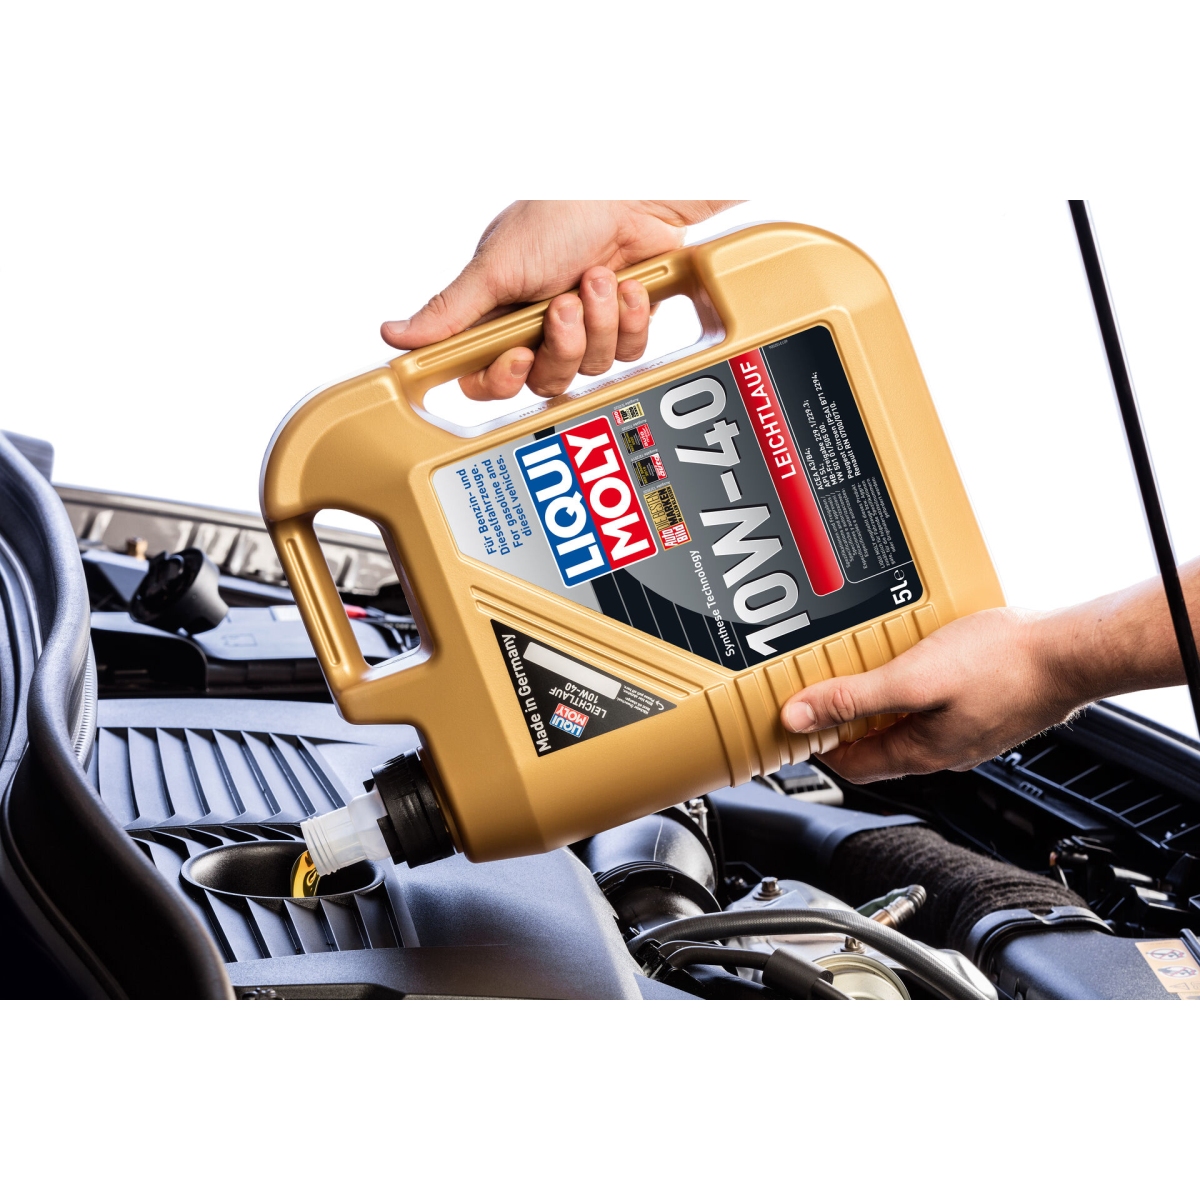 LIQUI MOLY 1310 Motoröl Leichtlauf 10W-40 Kanister 5 L inkl. Ölwechselkarte